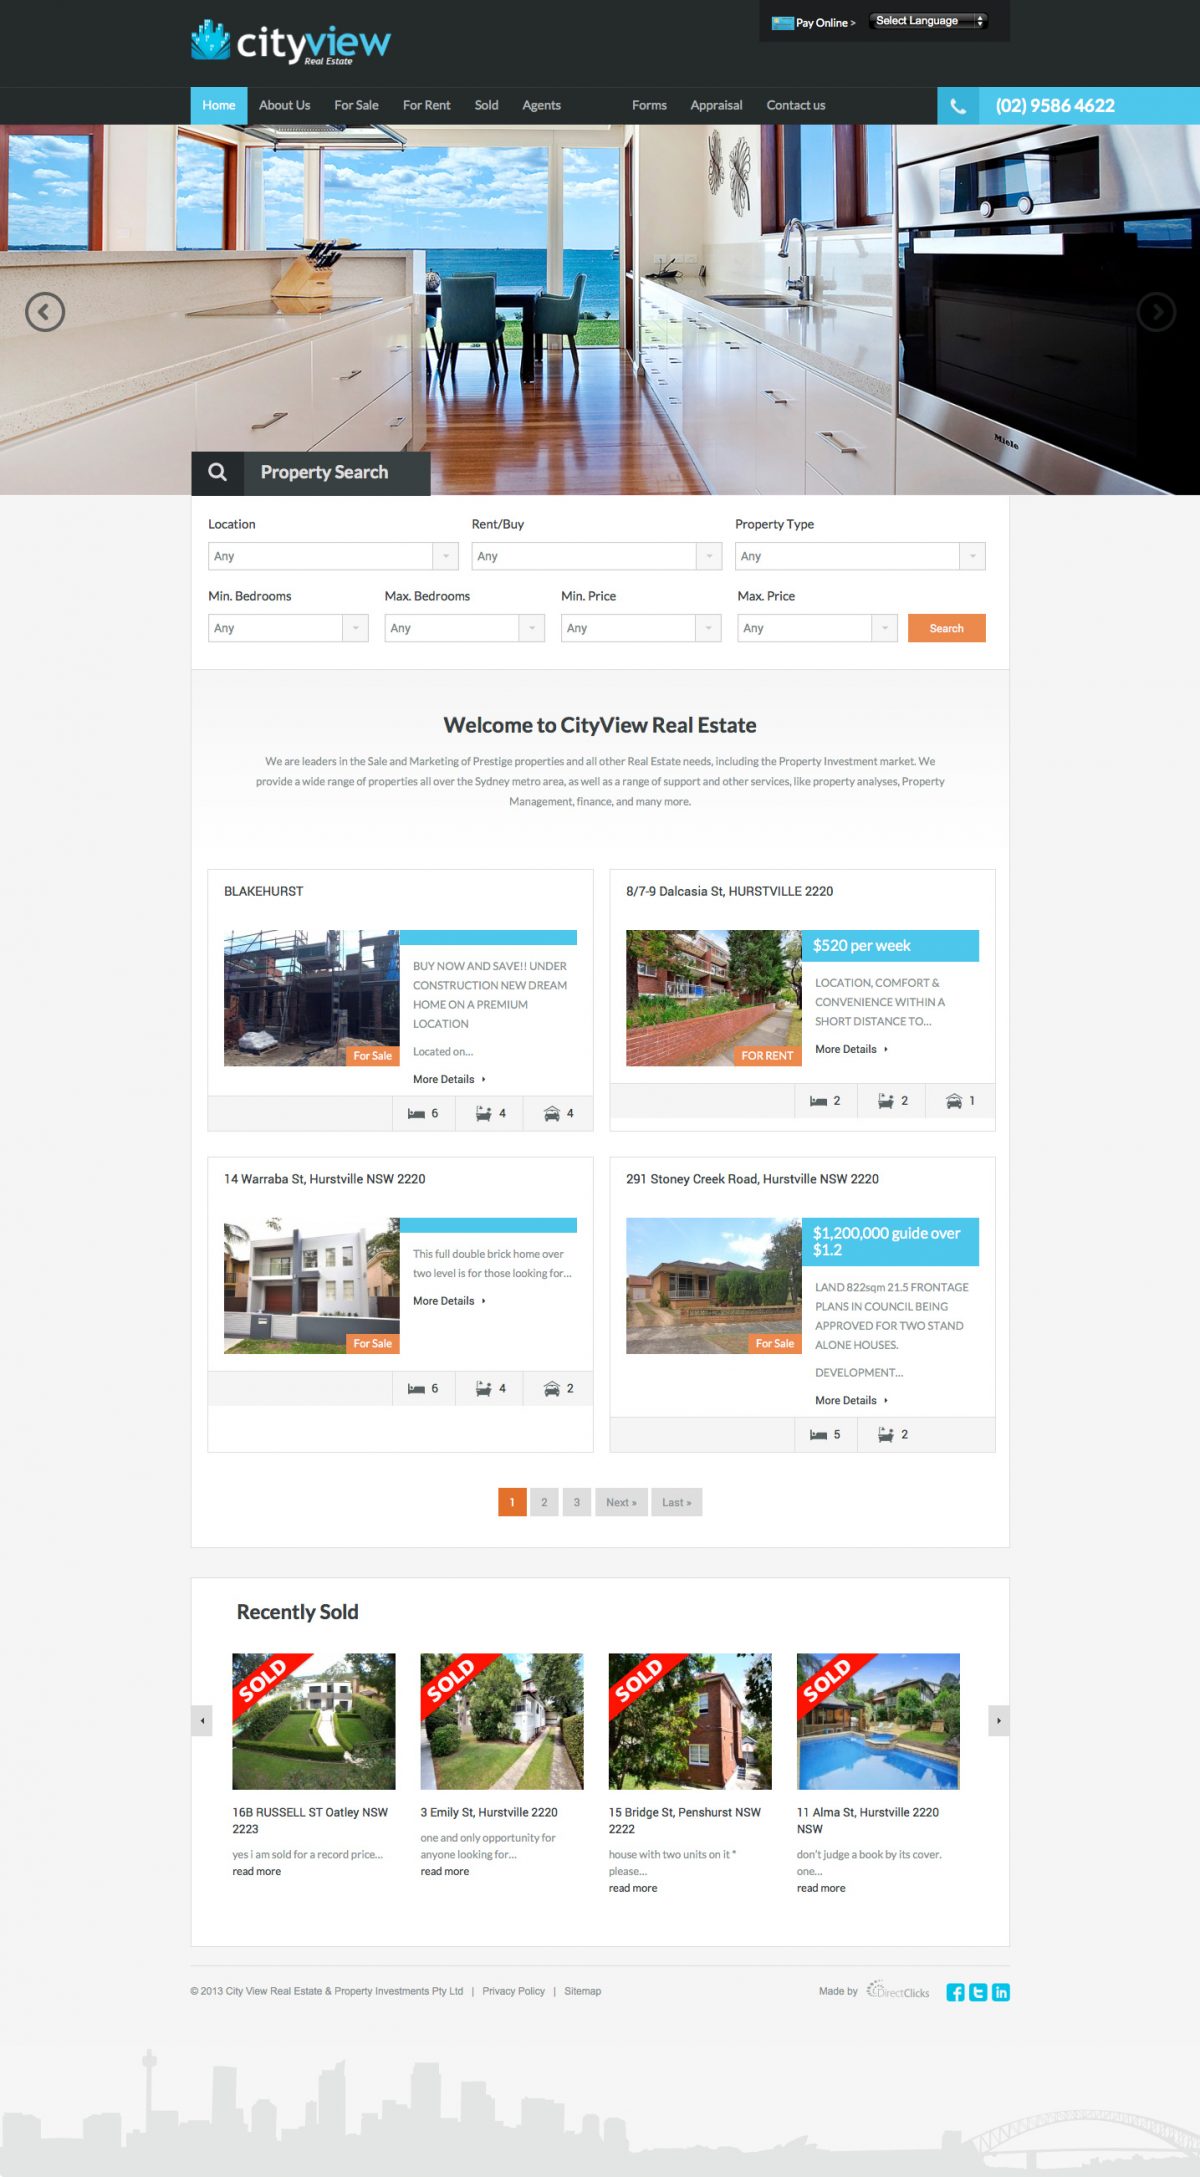 Cityview Real Estate - Web Design Agency - Direct Clicks